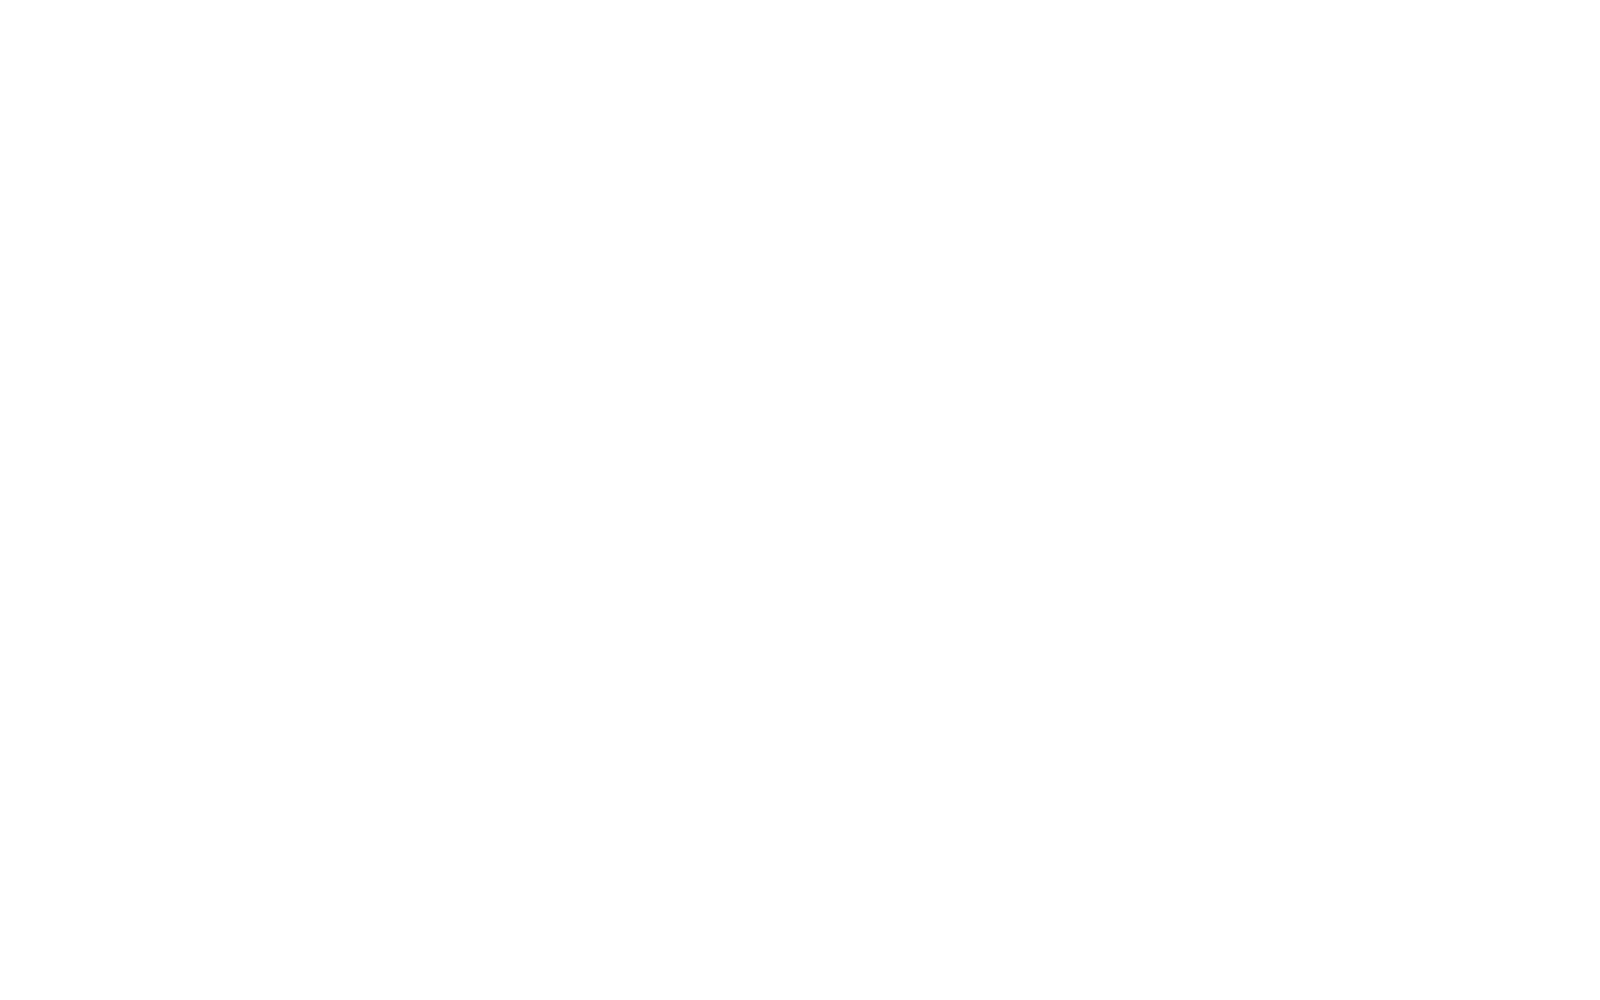 ChainPet